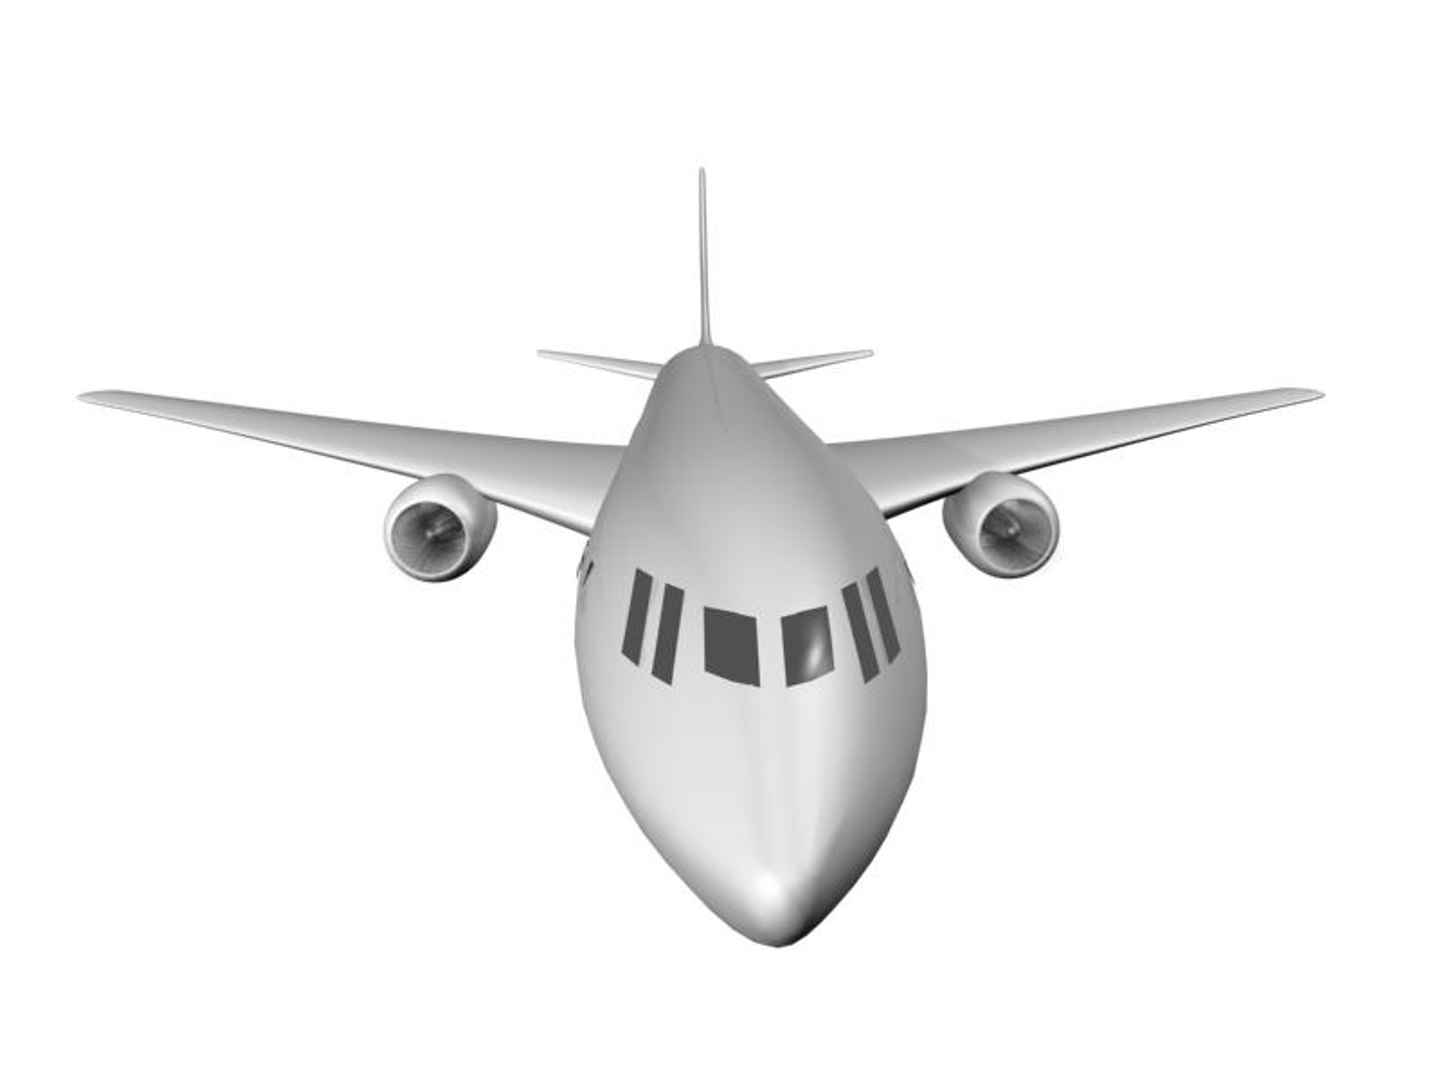 Free Airplane 3d Model Turbosquid 228898 7549